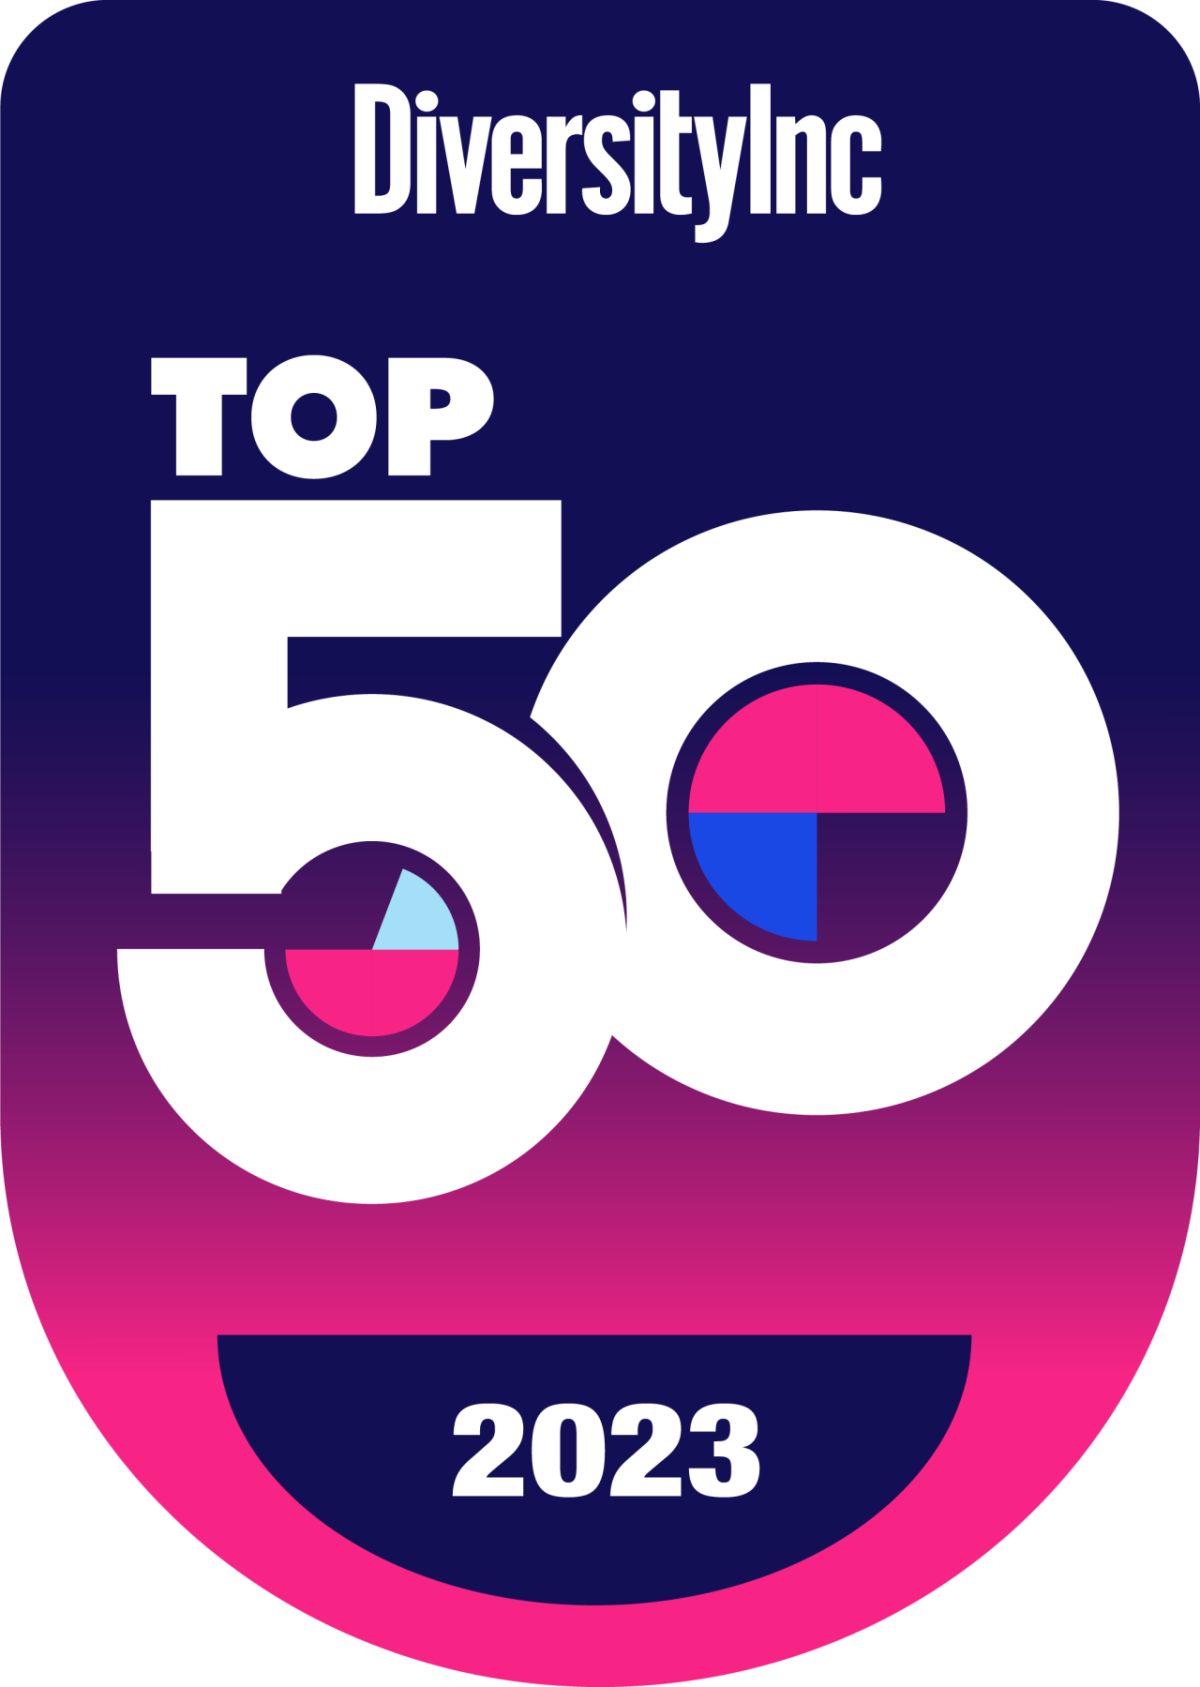 DiversityInc Top 50 2023 logo.